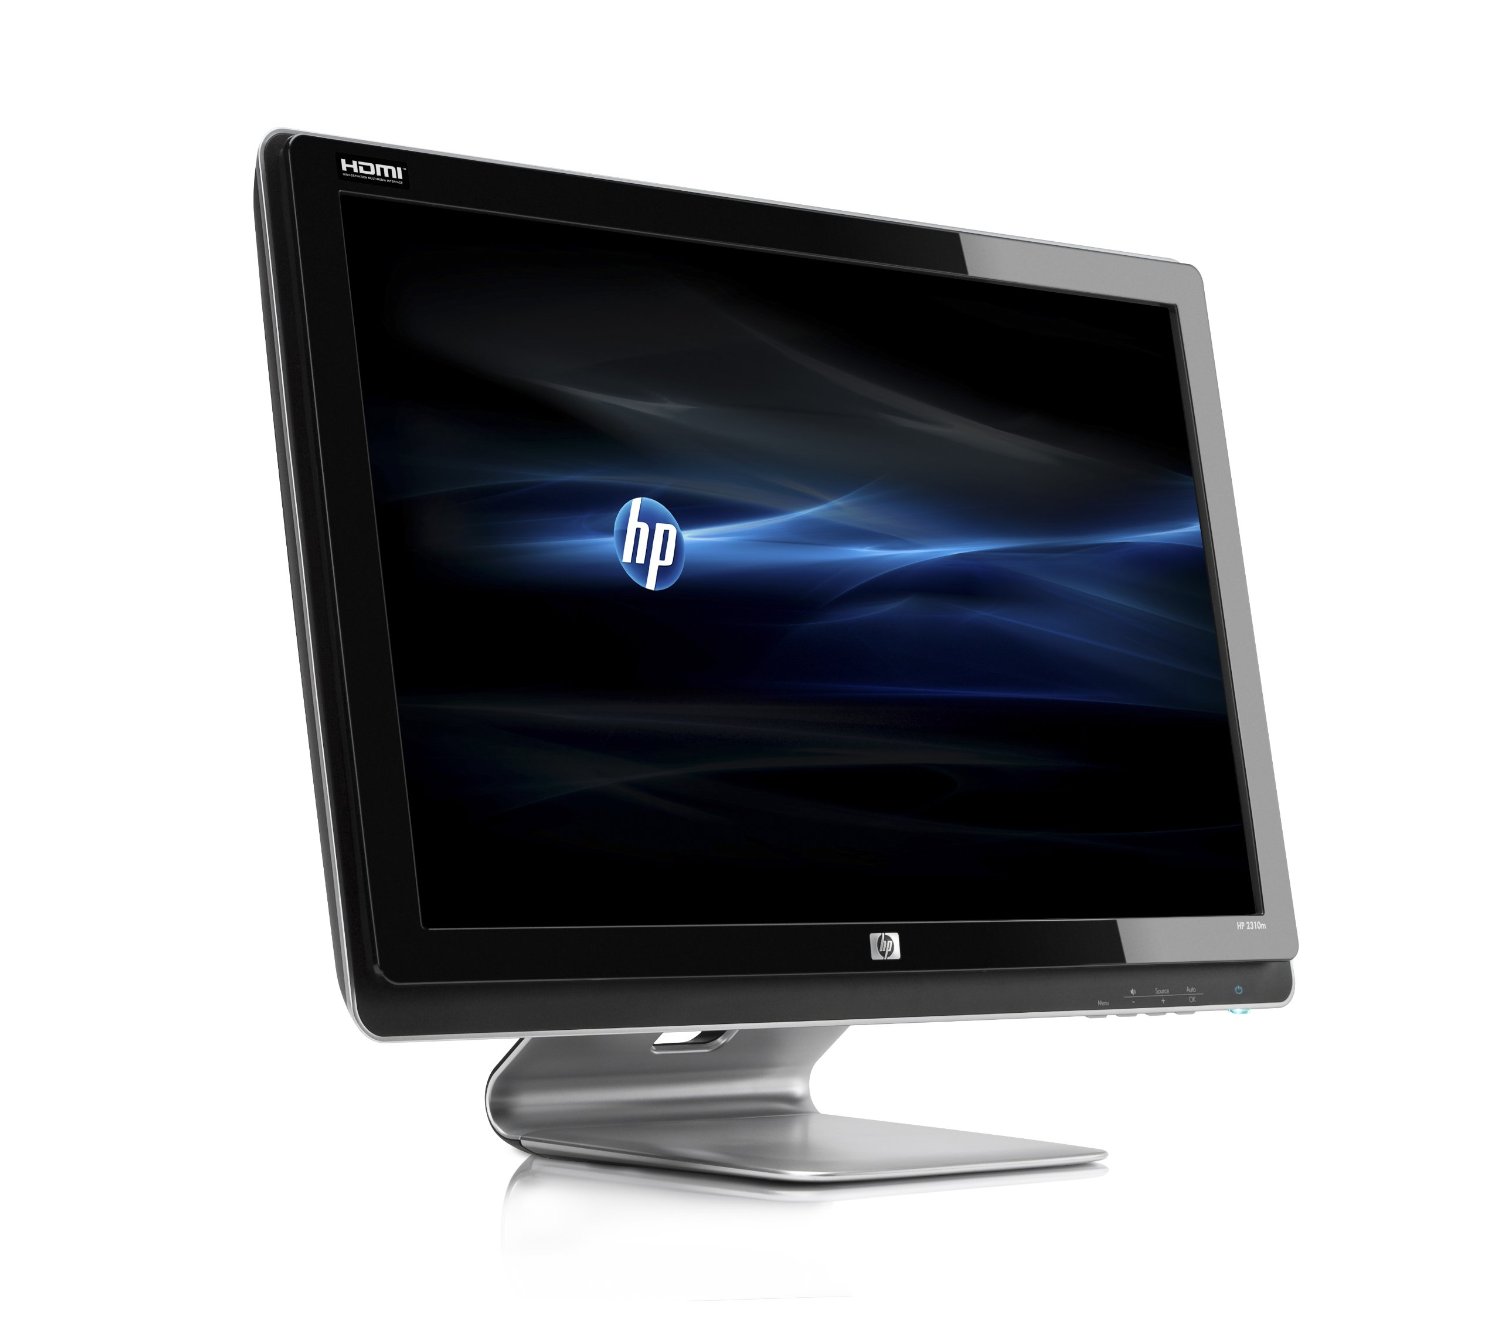 HP 2310m 23" Full HD Widescreen LCD Monitor